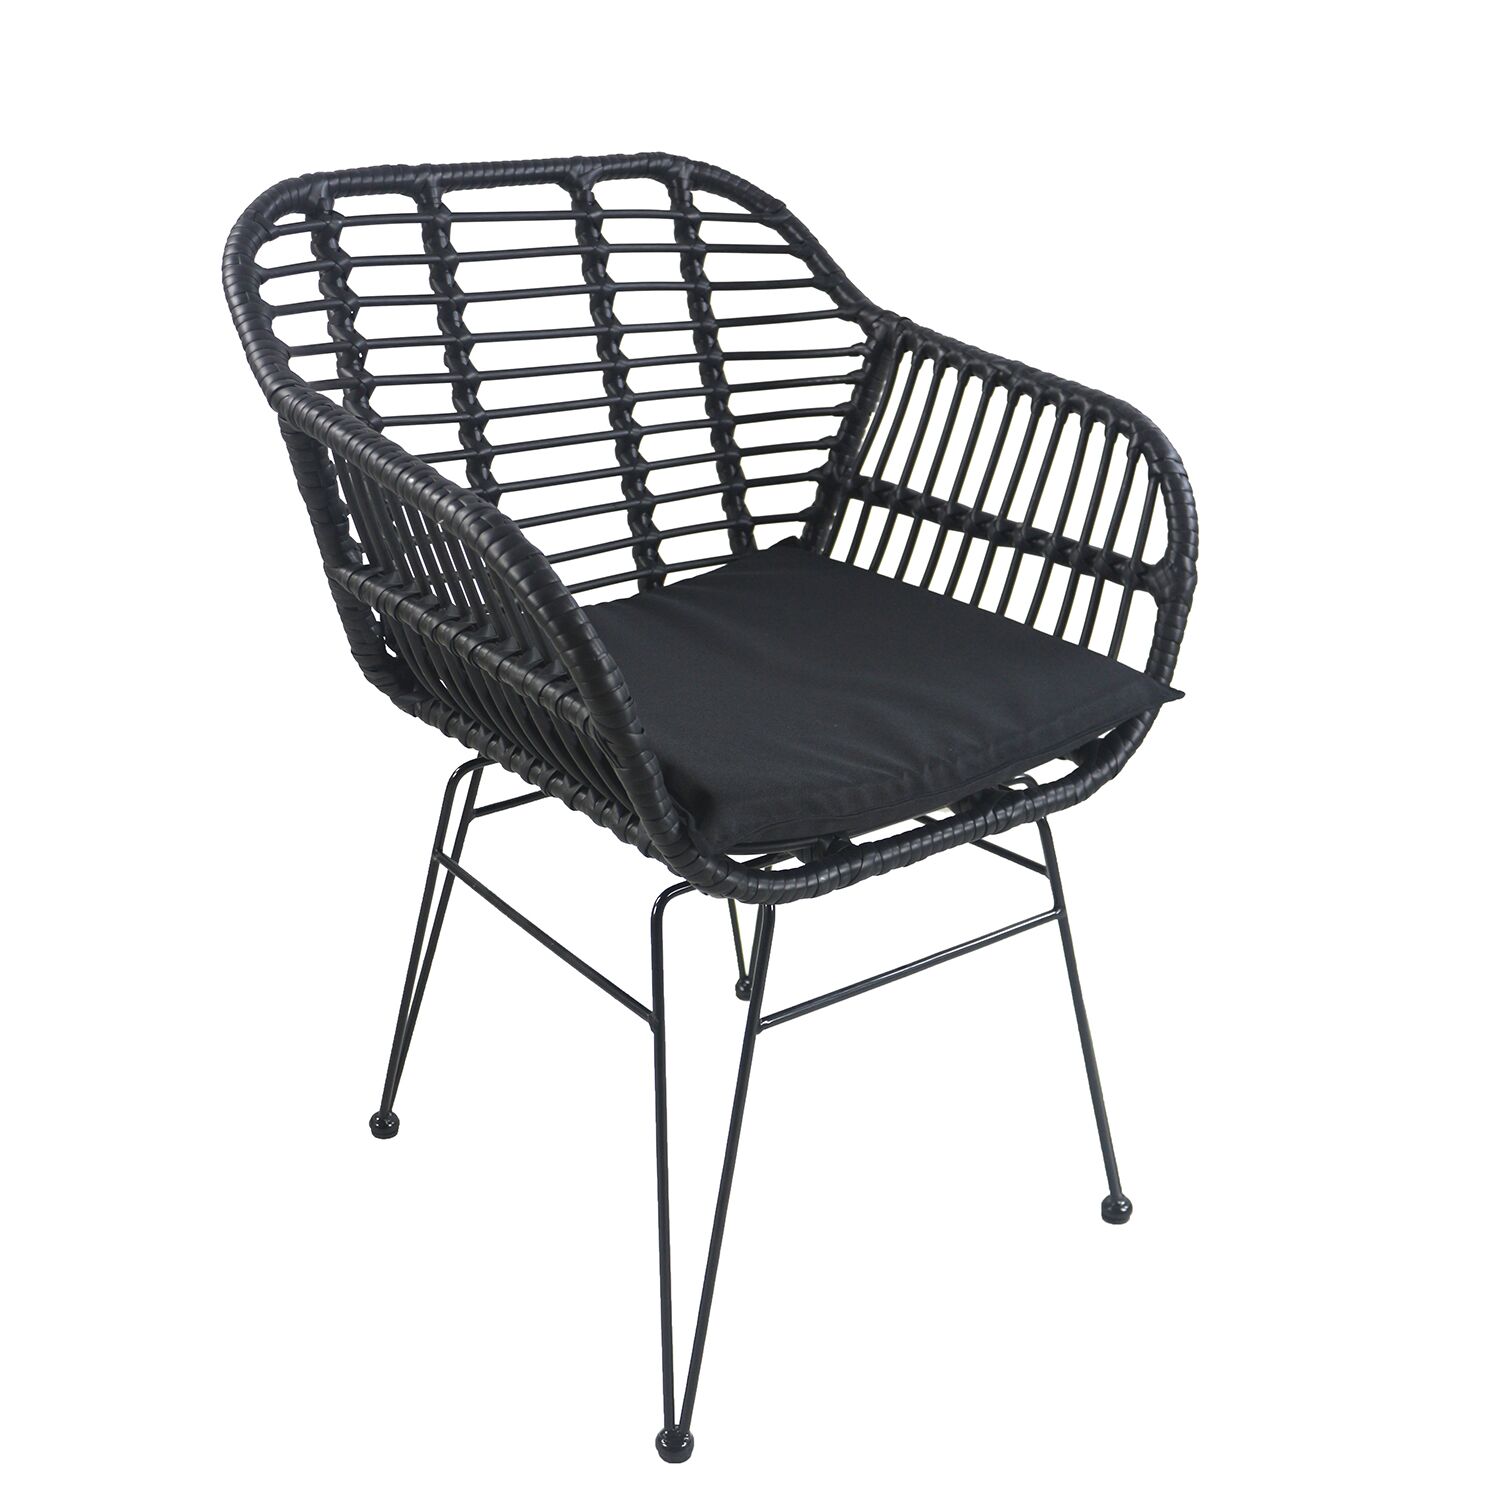 ACTORIUS Garden Chair Black Metal/Rattan 57x53x81cm